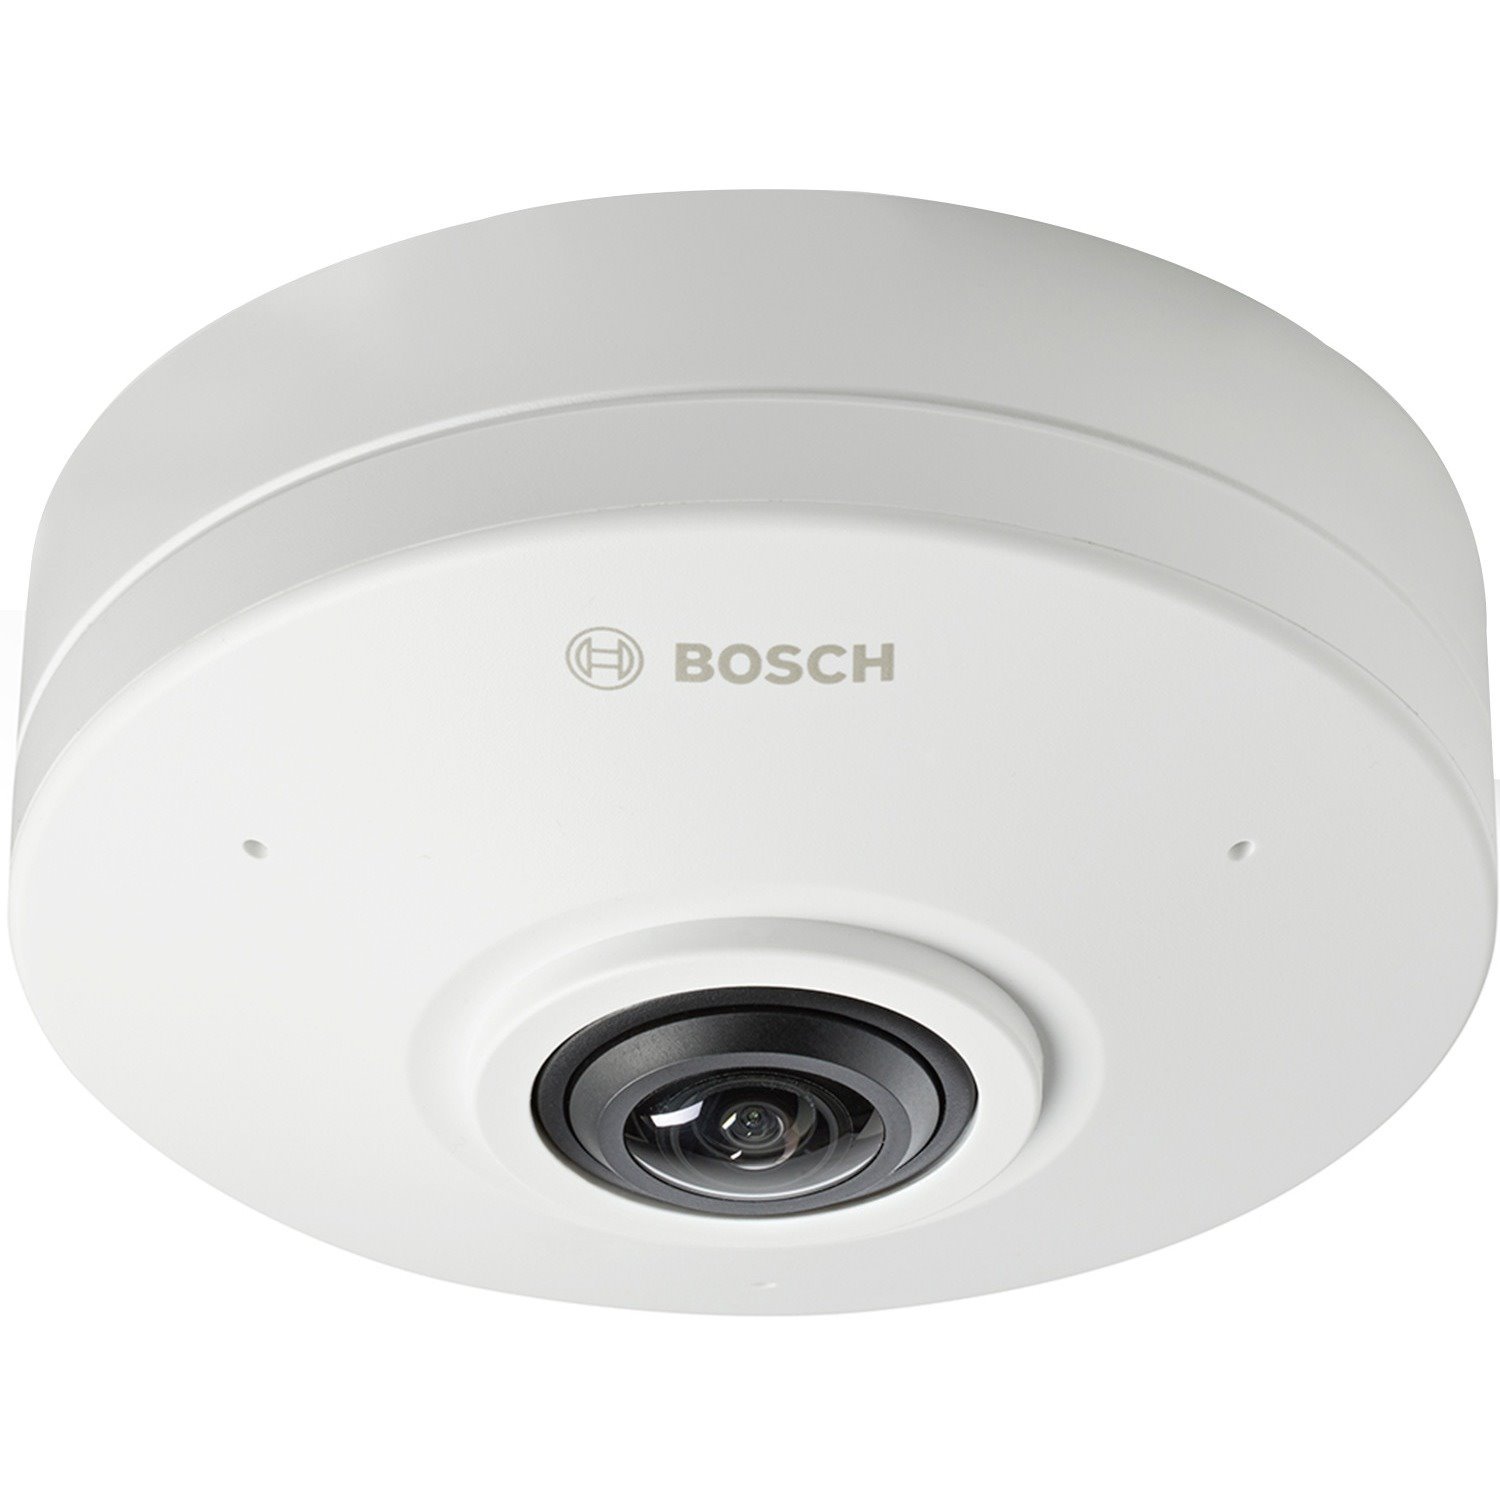 Bosch FlexiDome 6 Megapixel Indoor/Outdoor Full HD Network Camera - Color, Monochrome - Dome